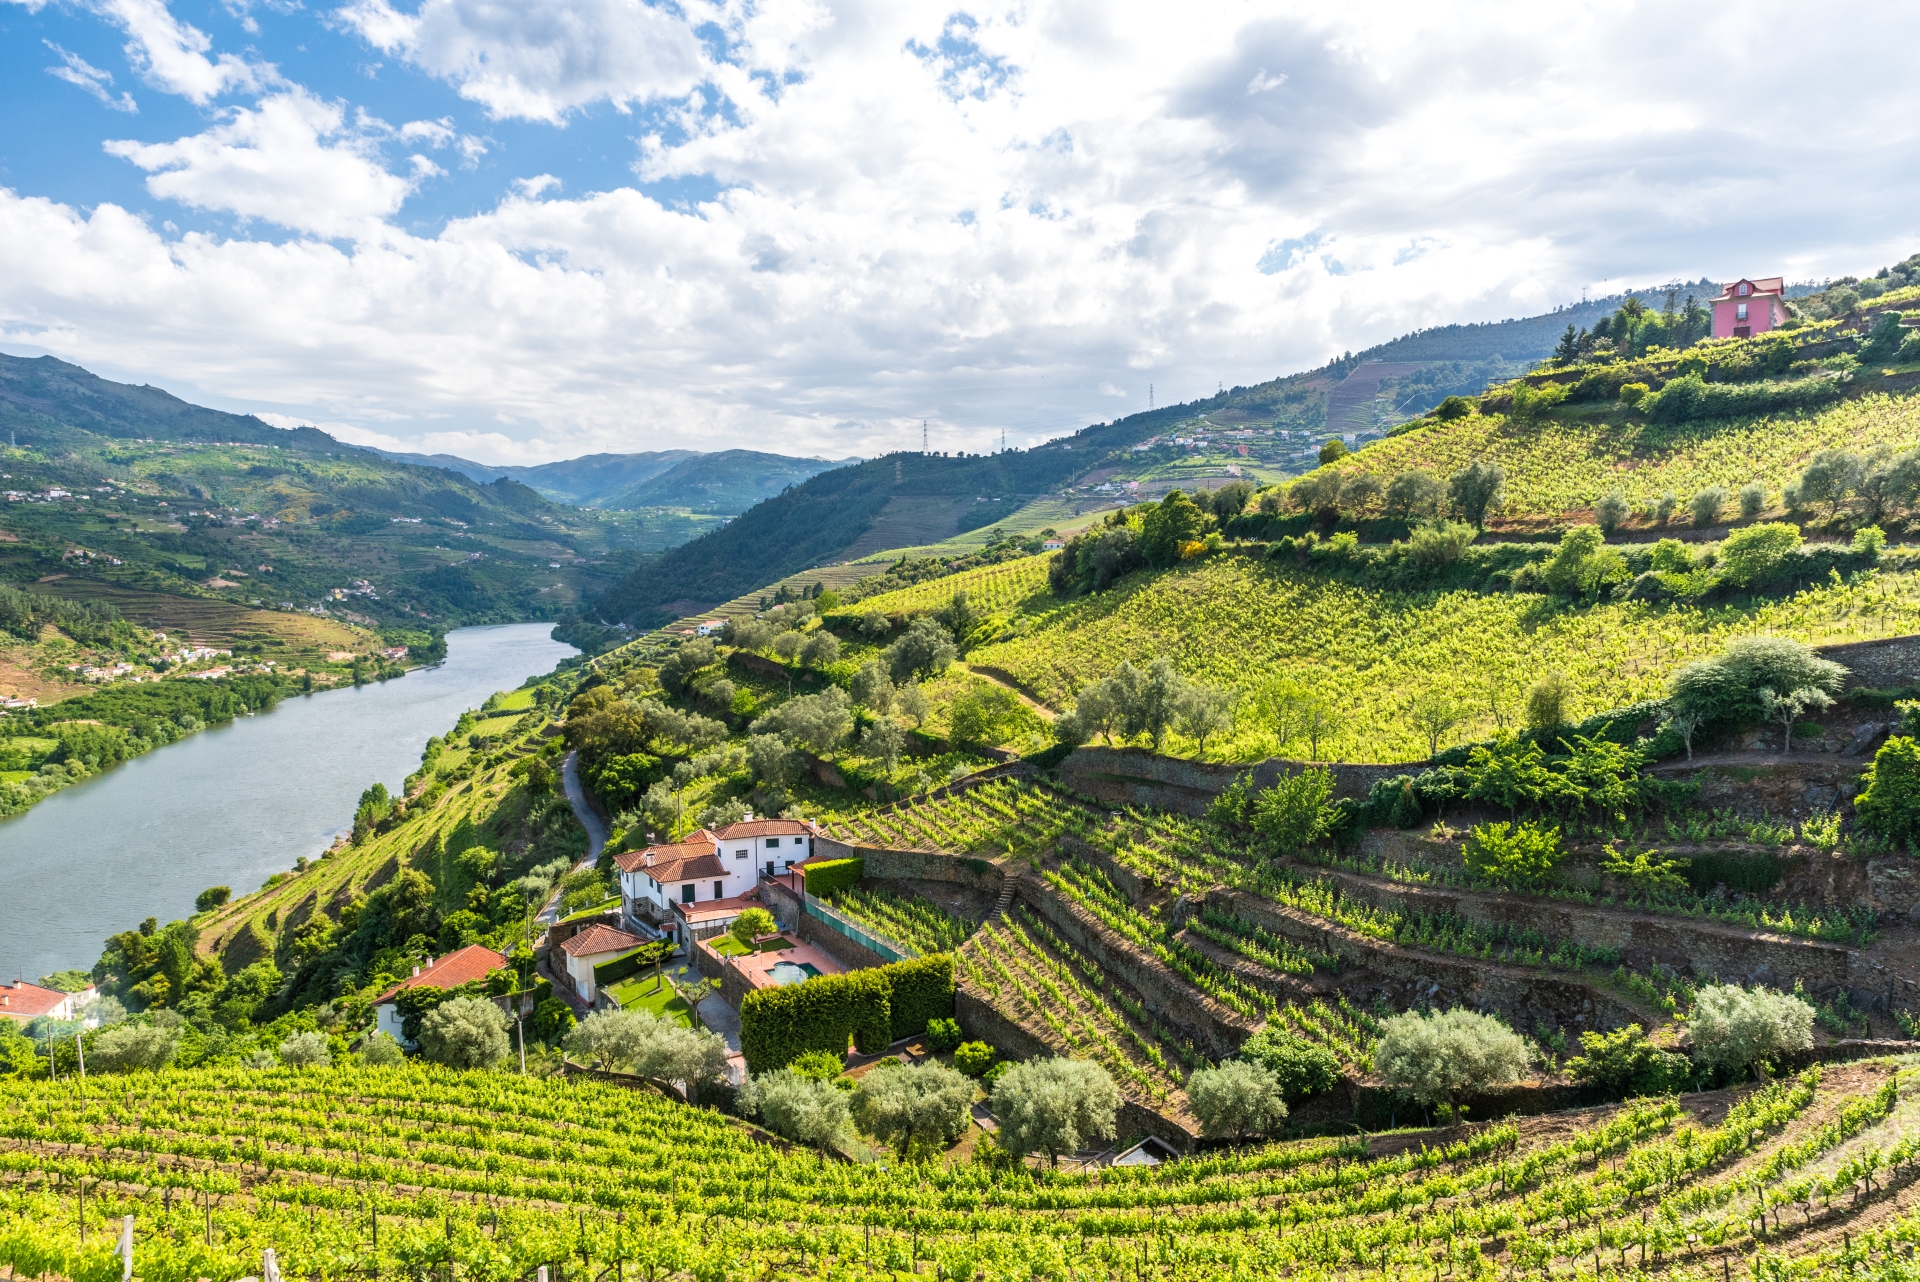 Perfect Pairings: Porto & Douro Valley